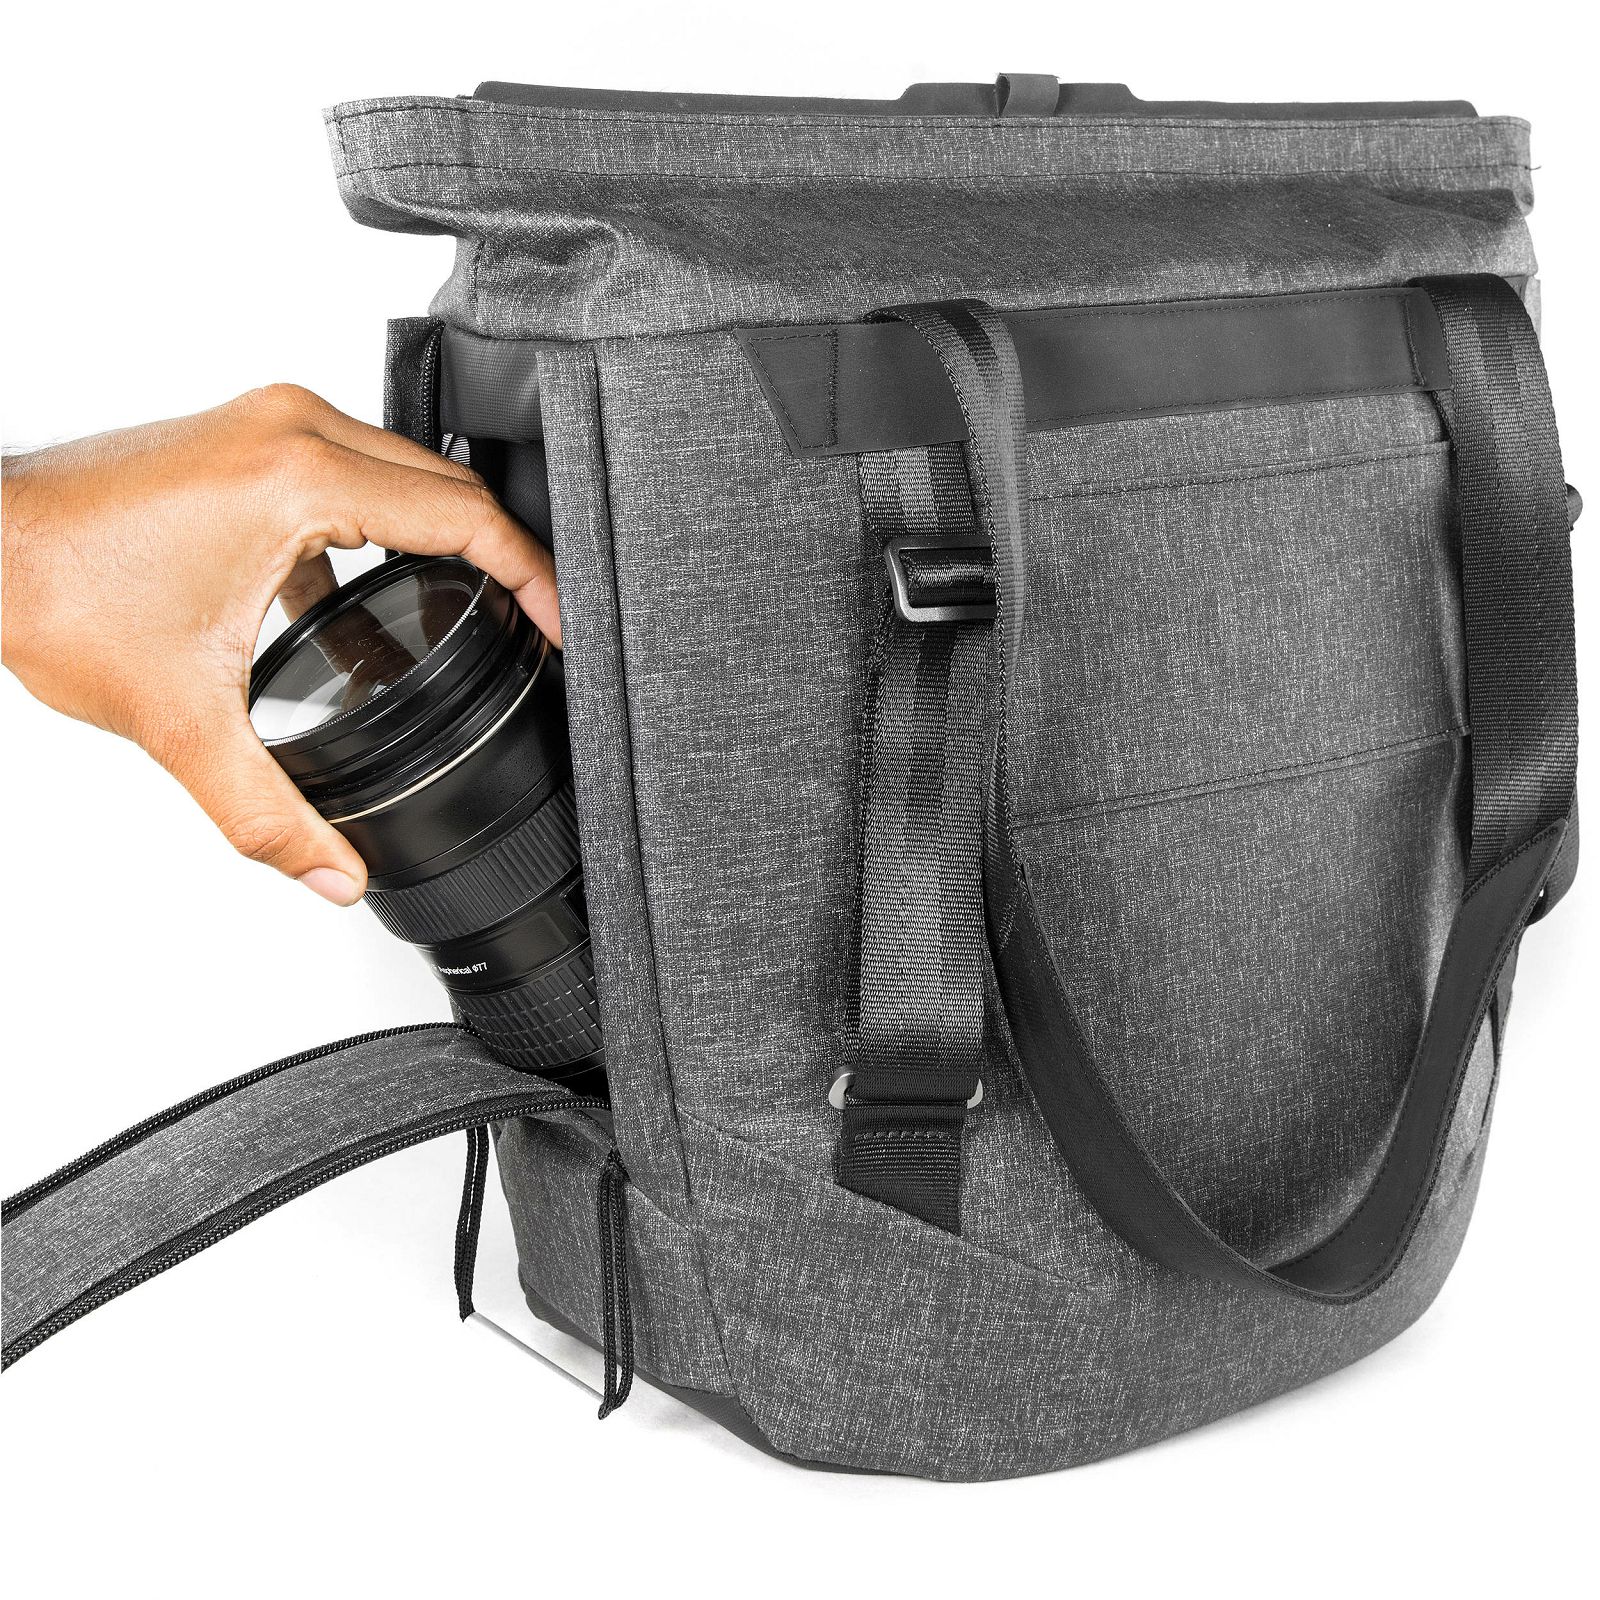 Peak Design Everyday Tote Charcoal Bag torba za fotoaparat i foto opremu (BT-20-BL-1)